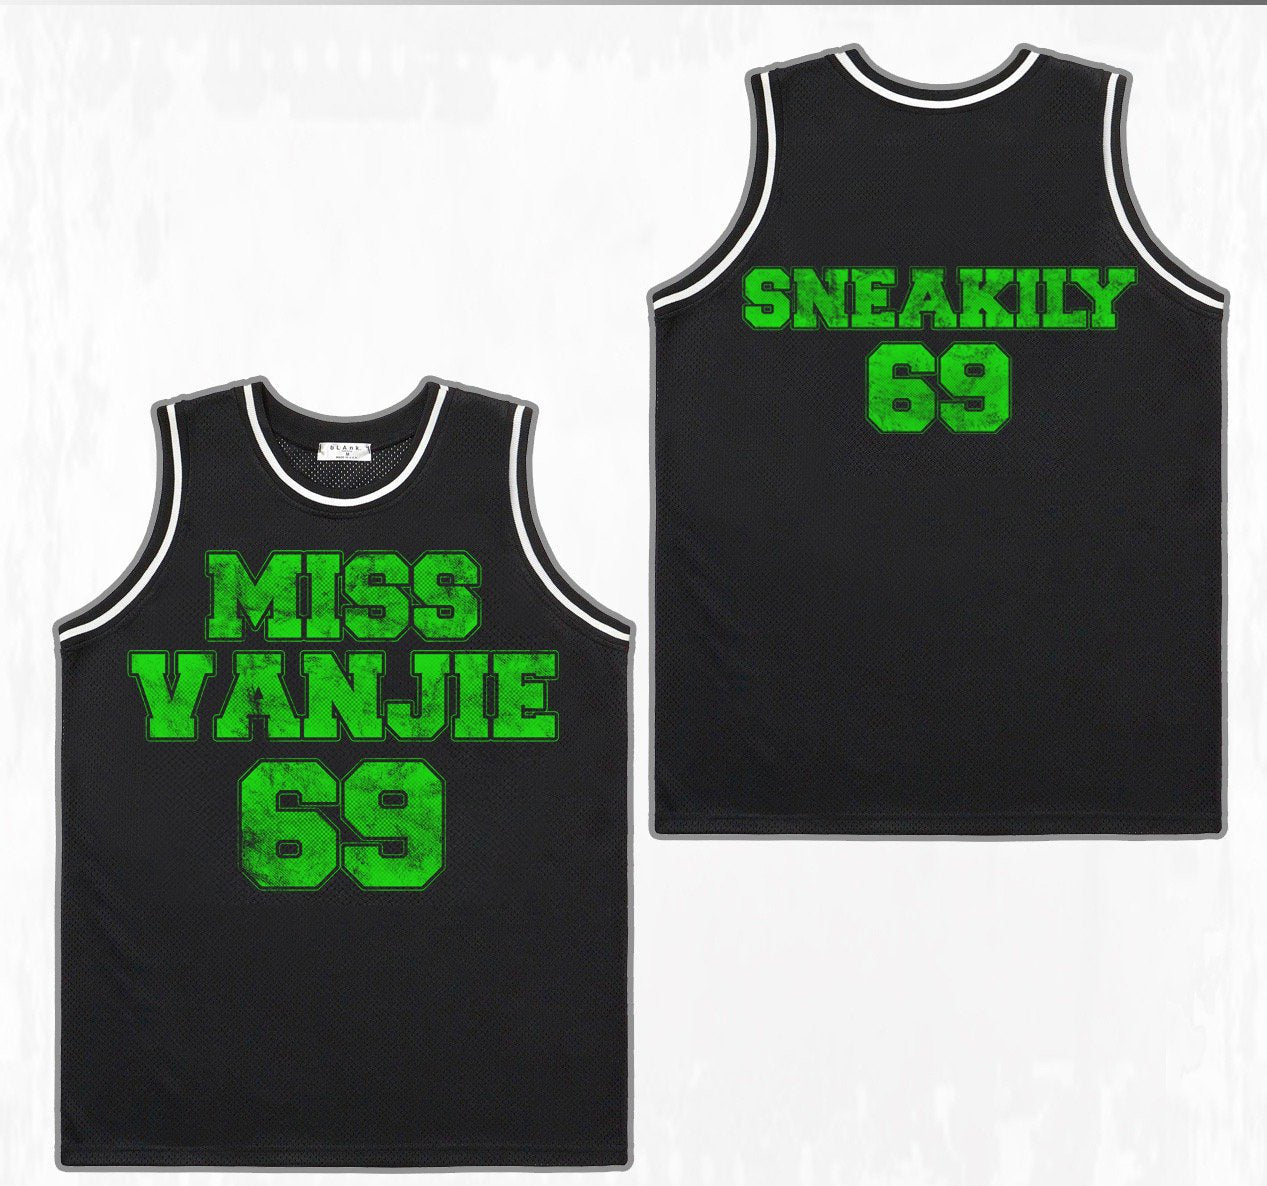 Vanjie *New* Miss Vanjie's Sneakily 69 Jersey